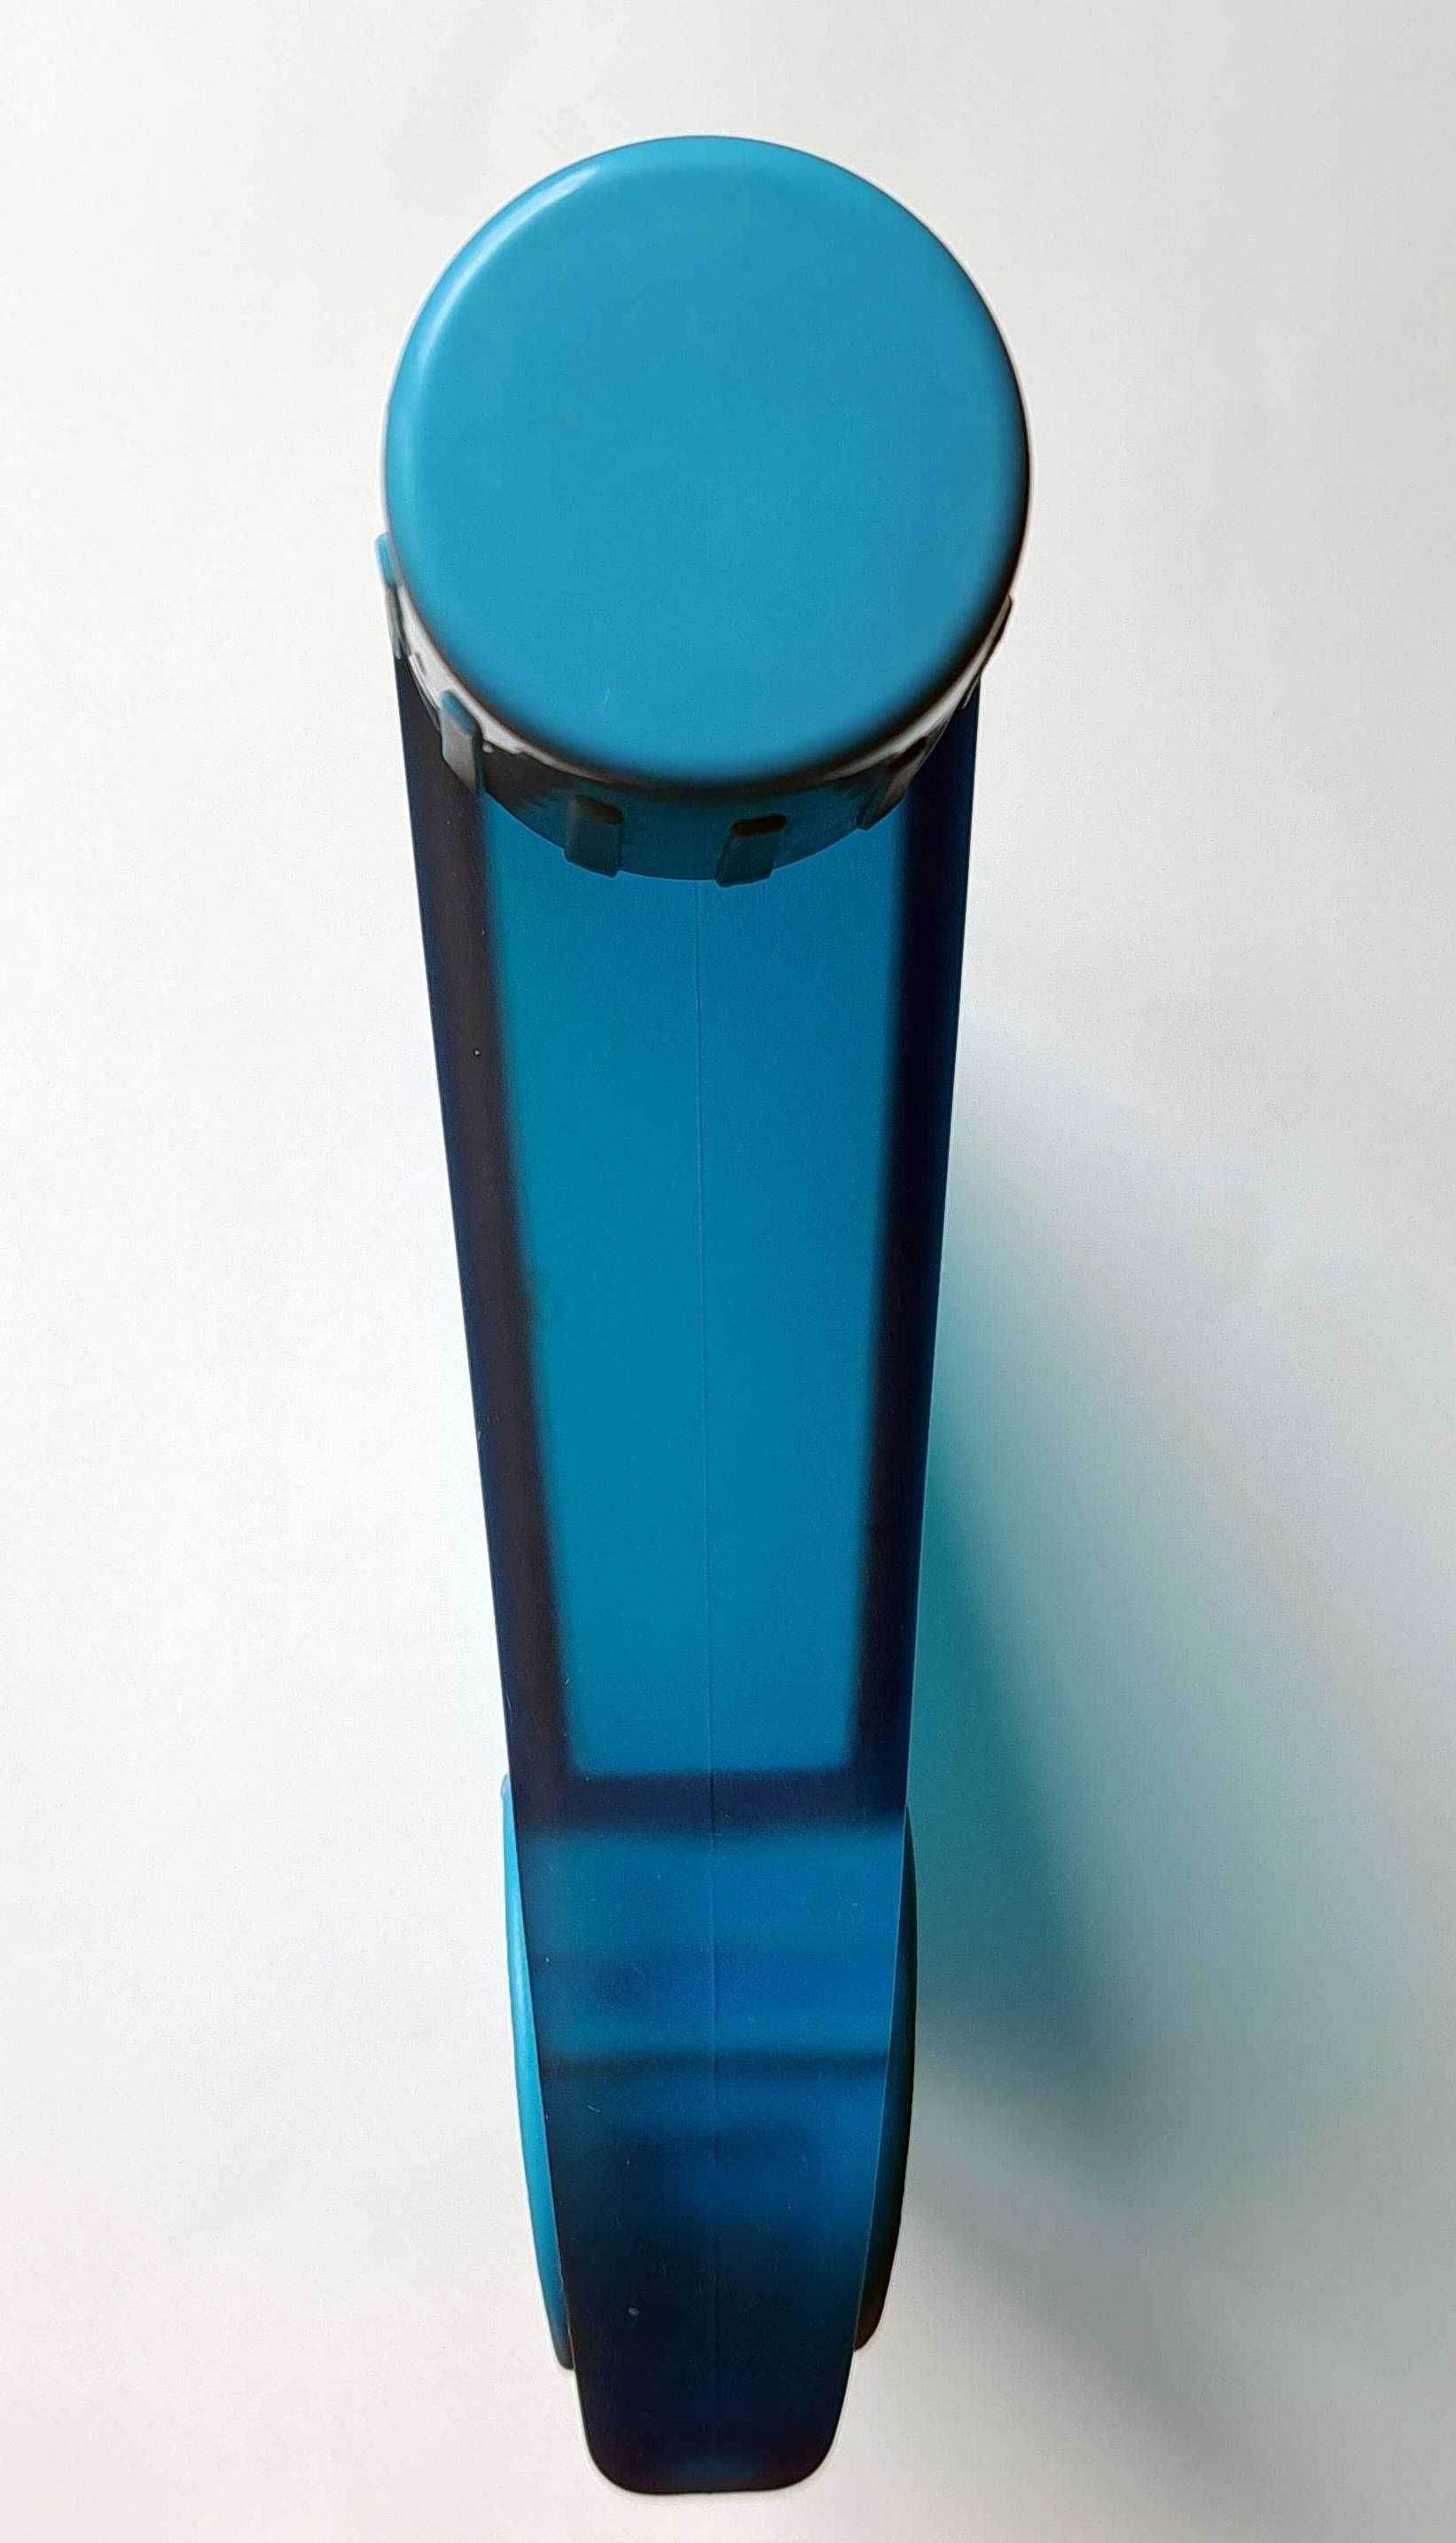 Ёмкость для воды портативная бутылка А5 Notebook Portable cup. 380 мл